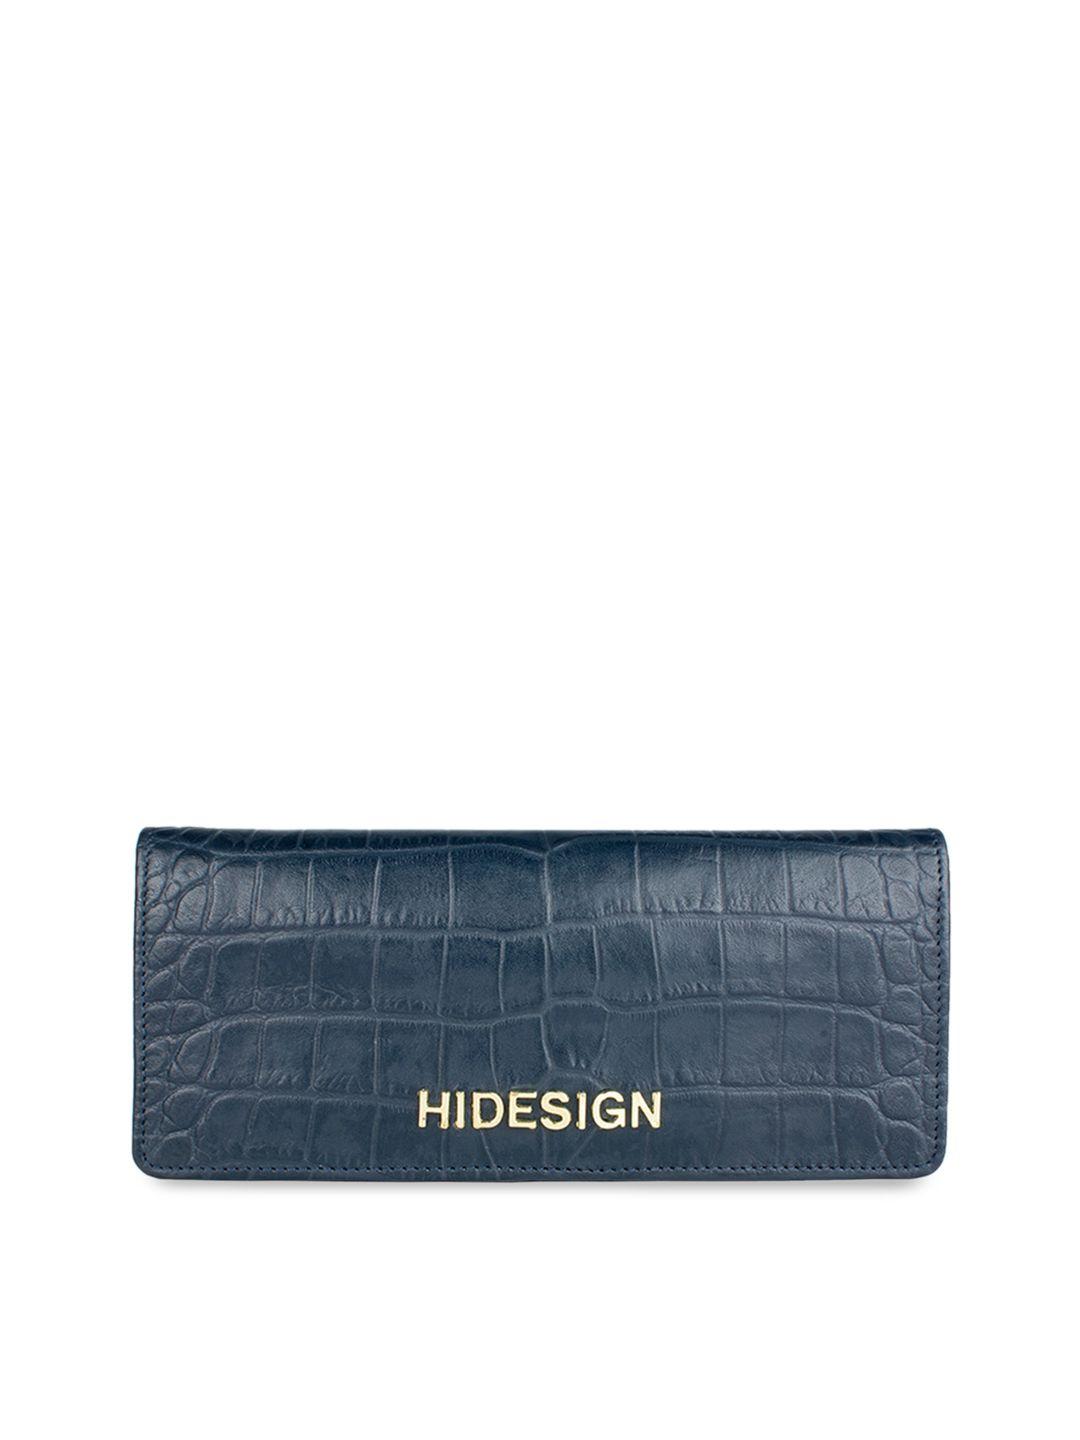 hidesign women blue crocodile skin textured leather two fold wallet